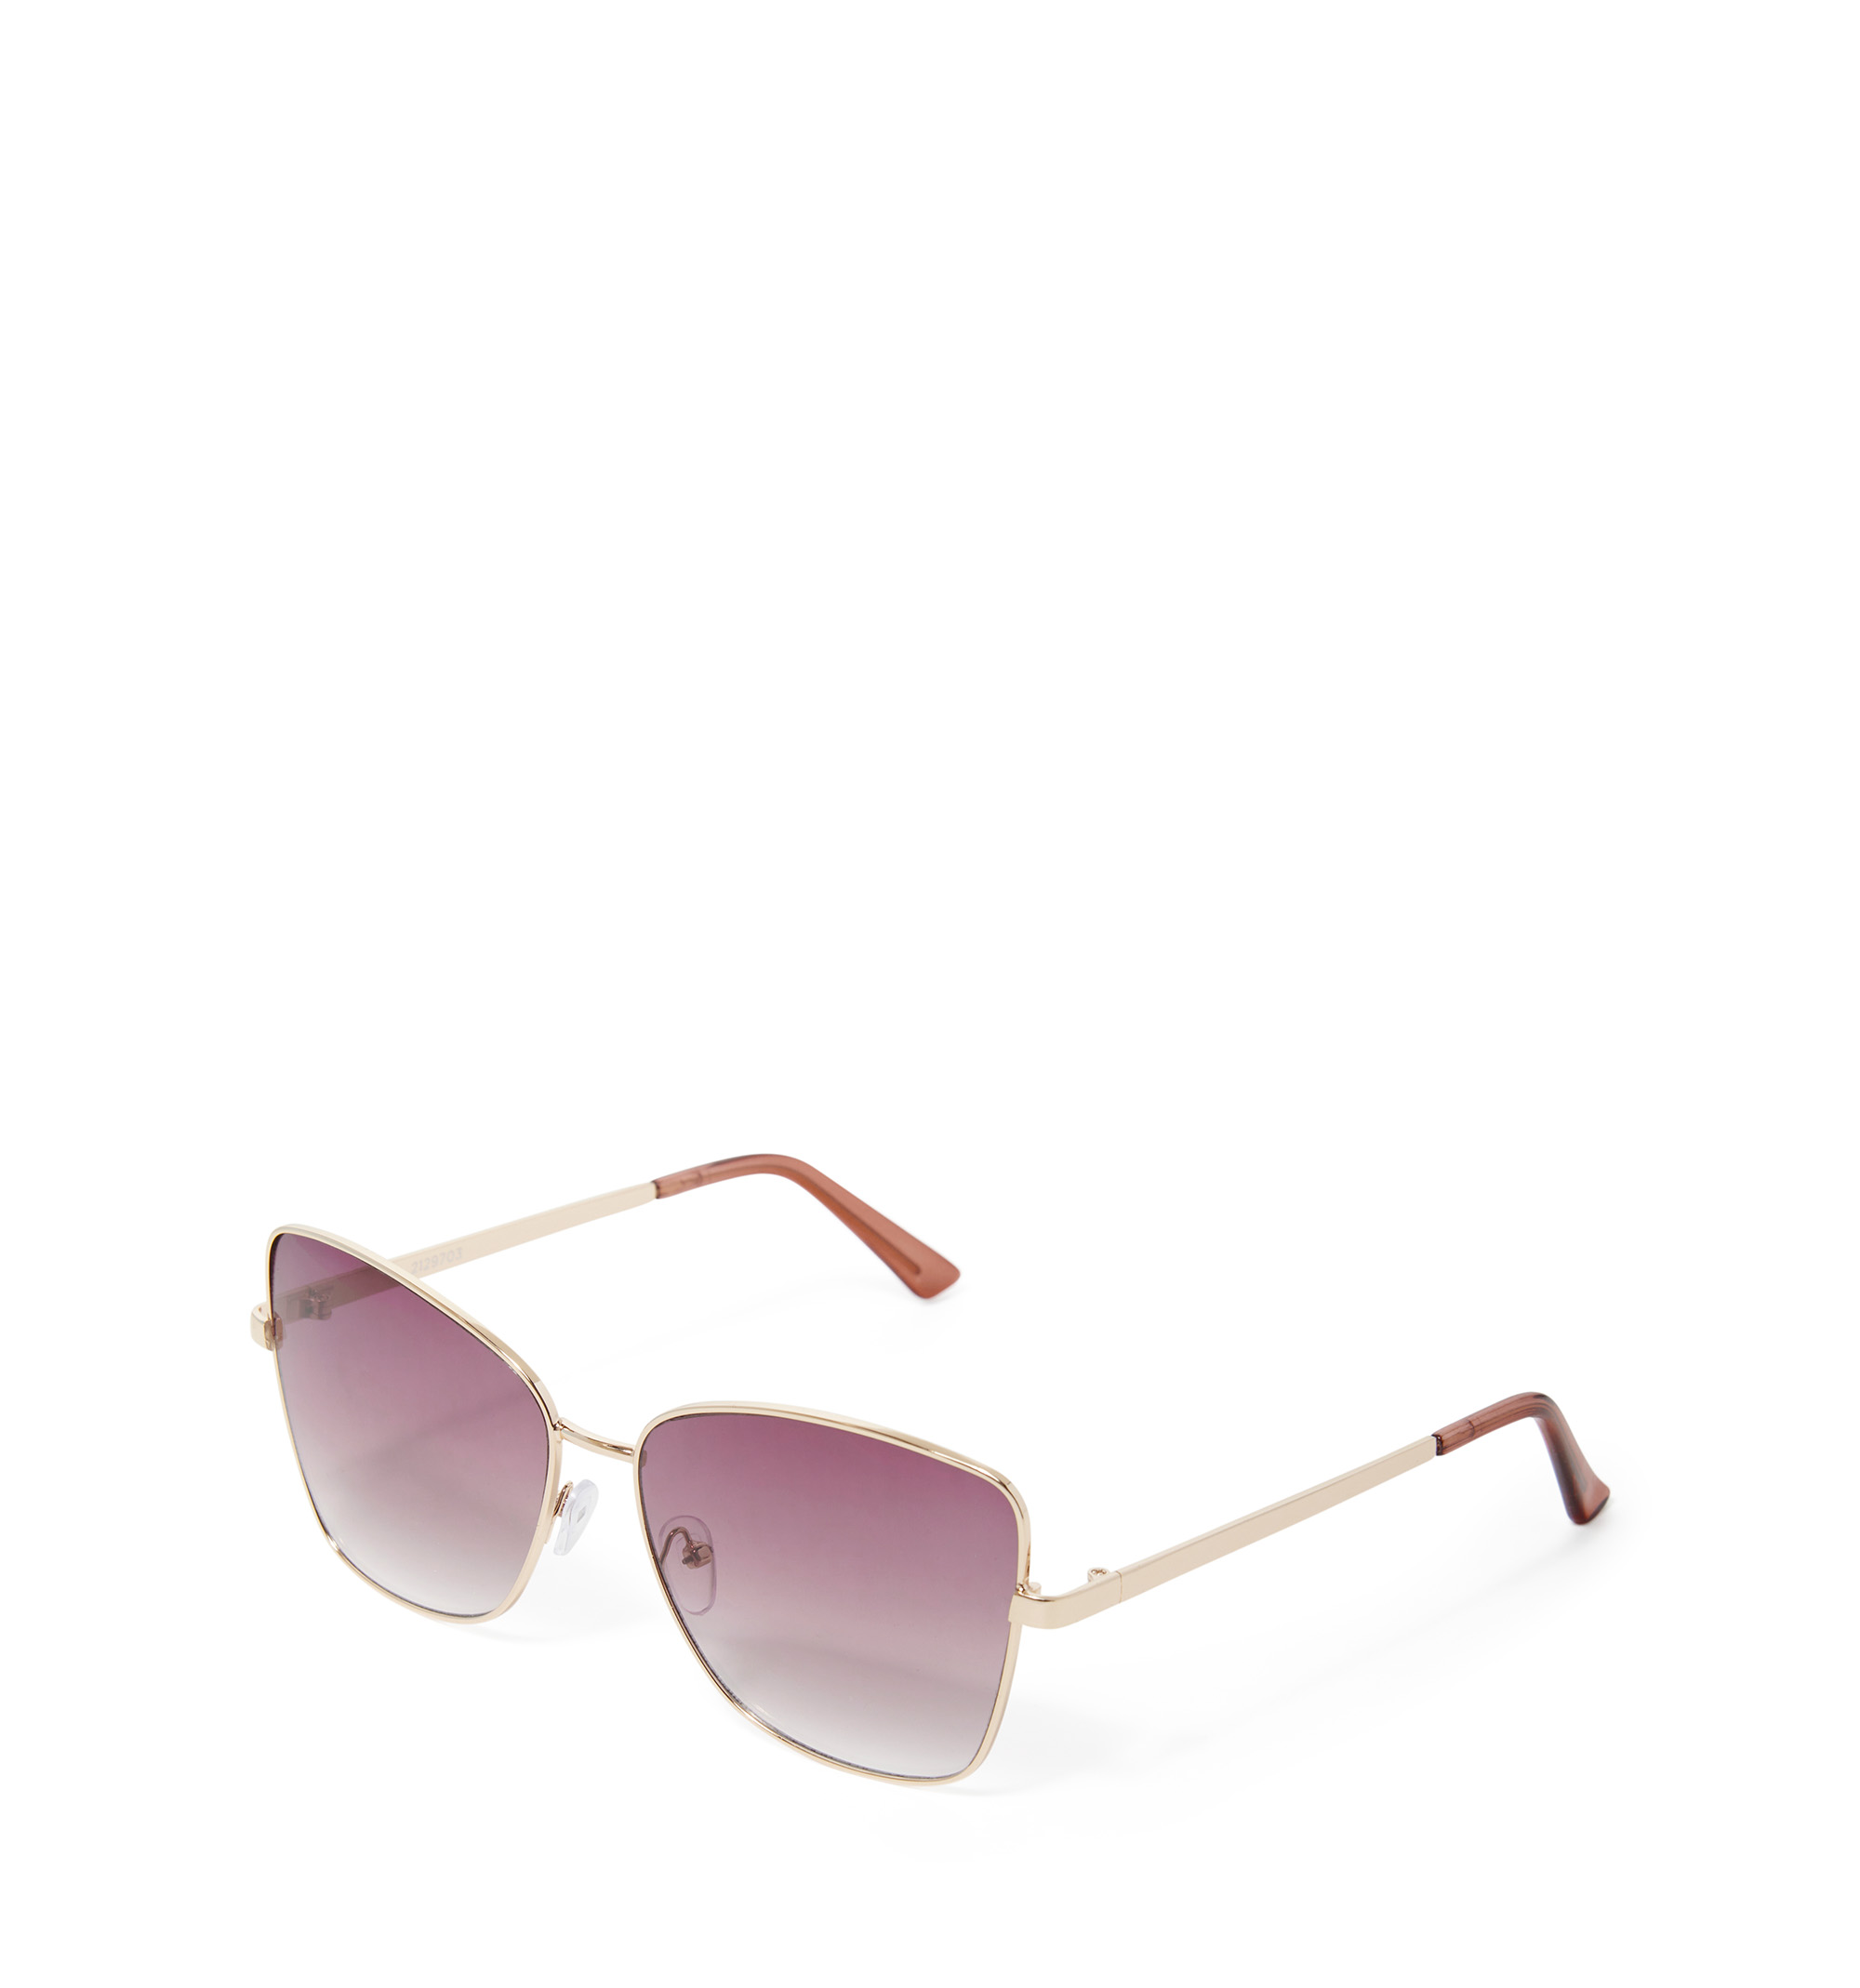 Buy Natalie Classic Sunglasses - Forever New